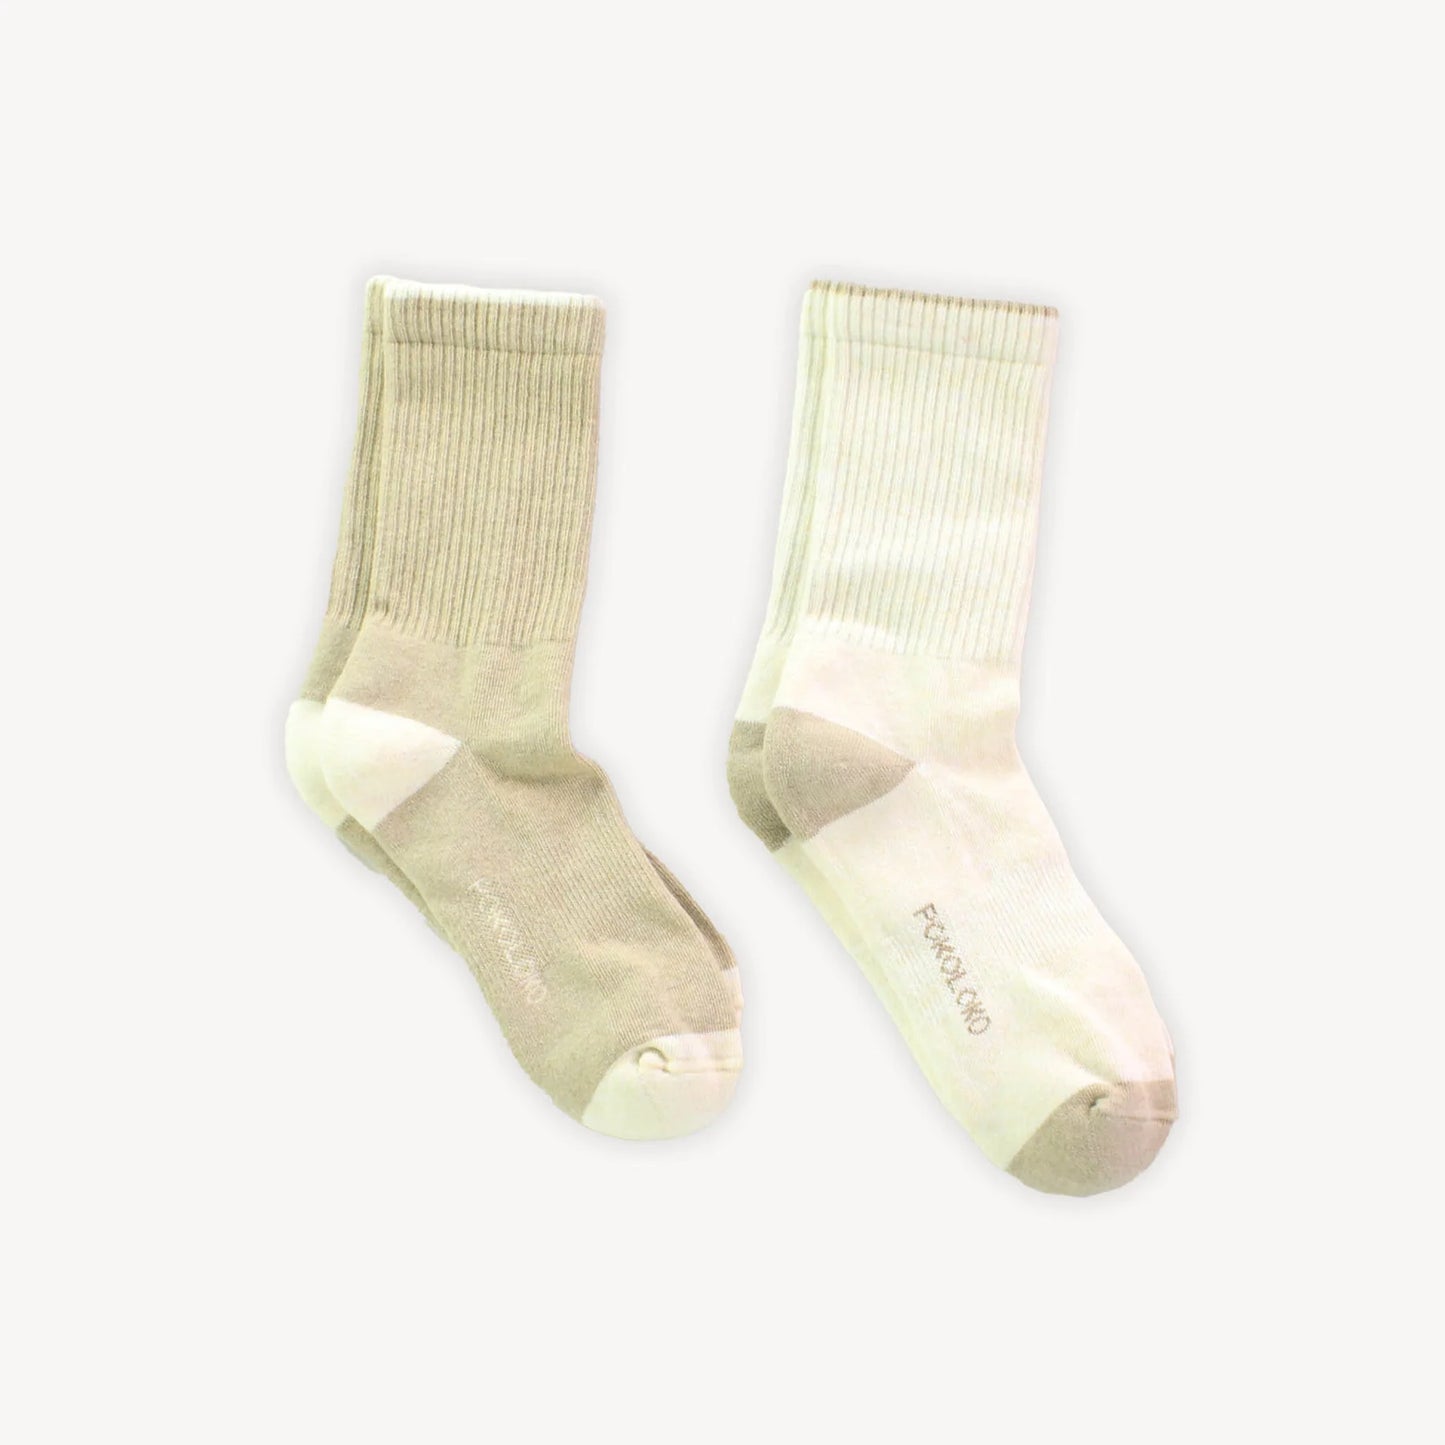 Pack of 2 Heel Toe Socks - Linen Beige